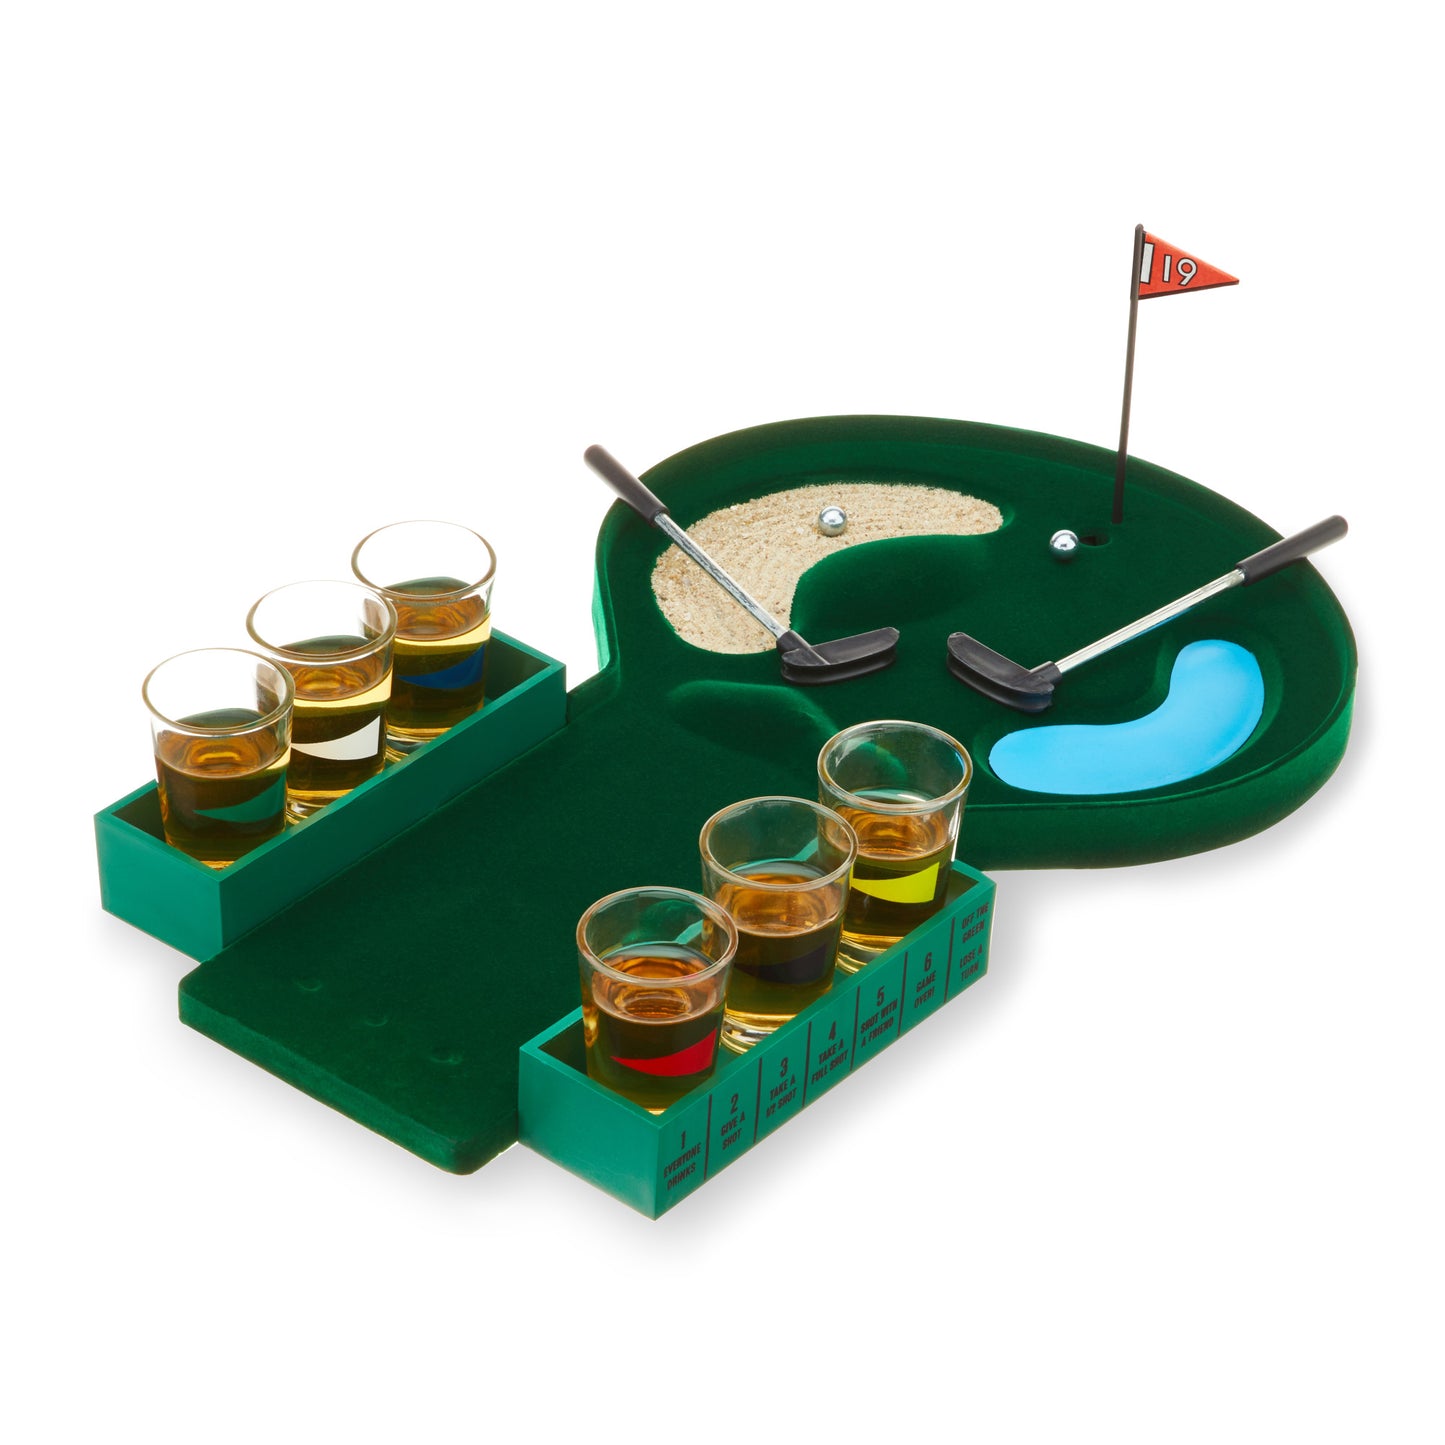 Putt & Shot Mini Golf Drinking Game